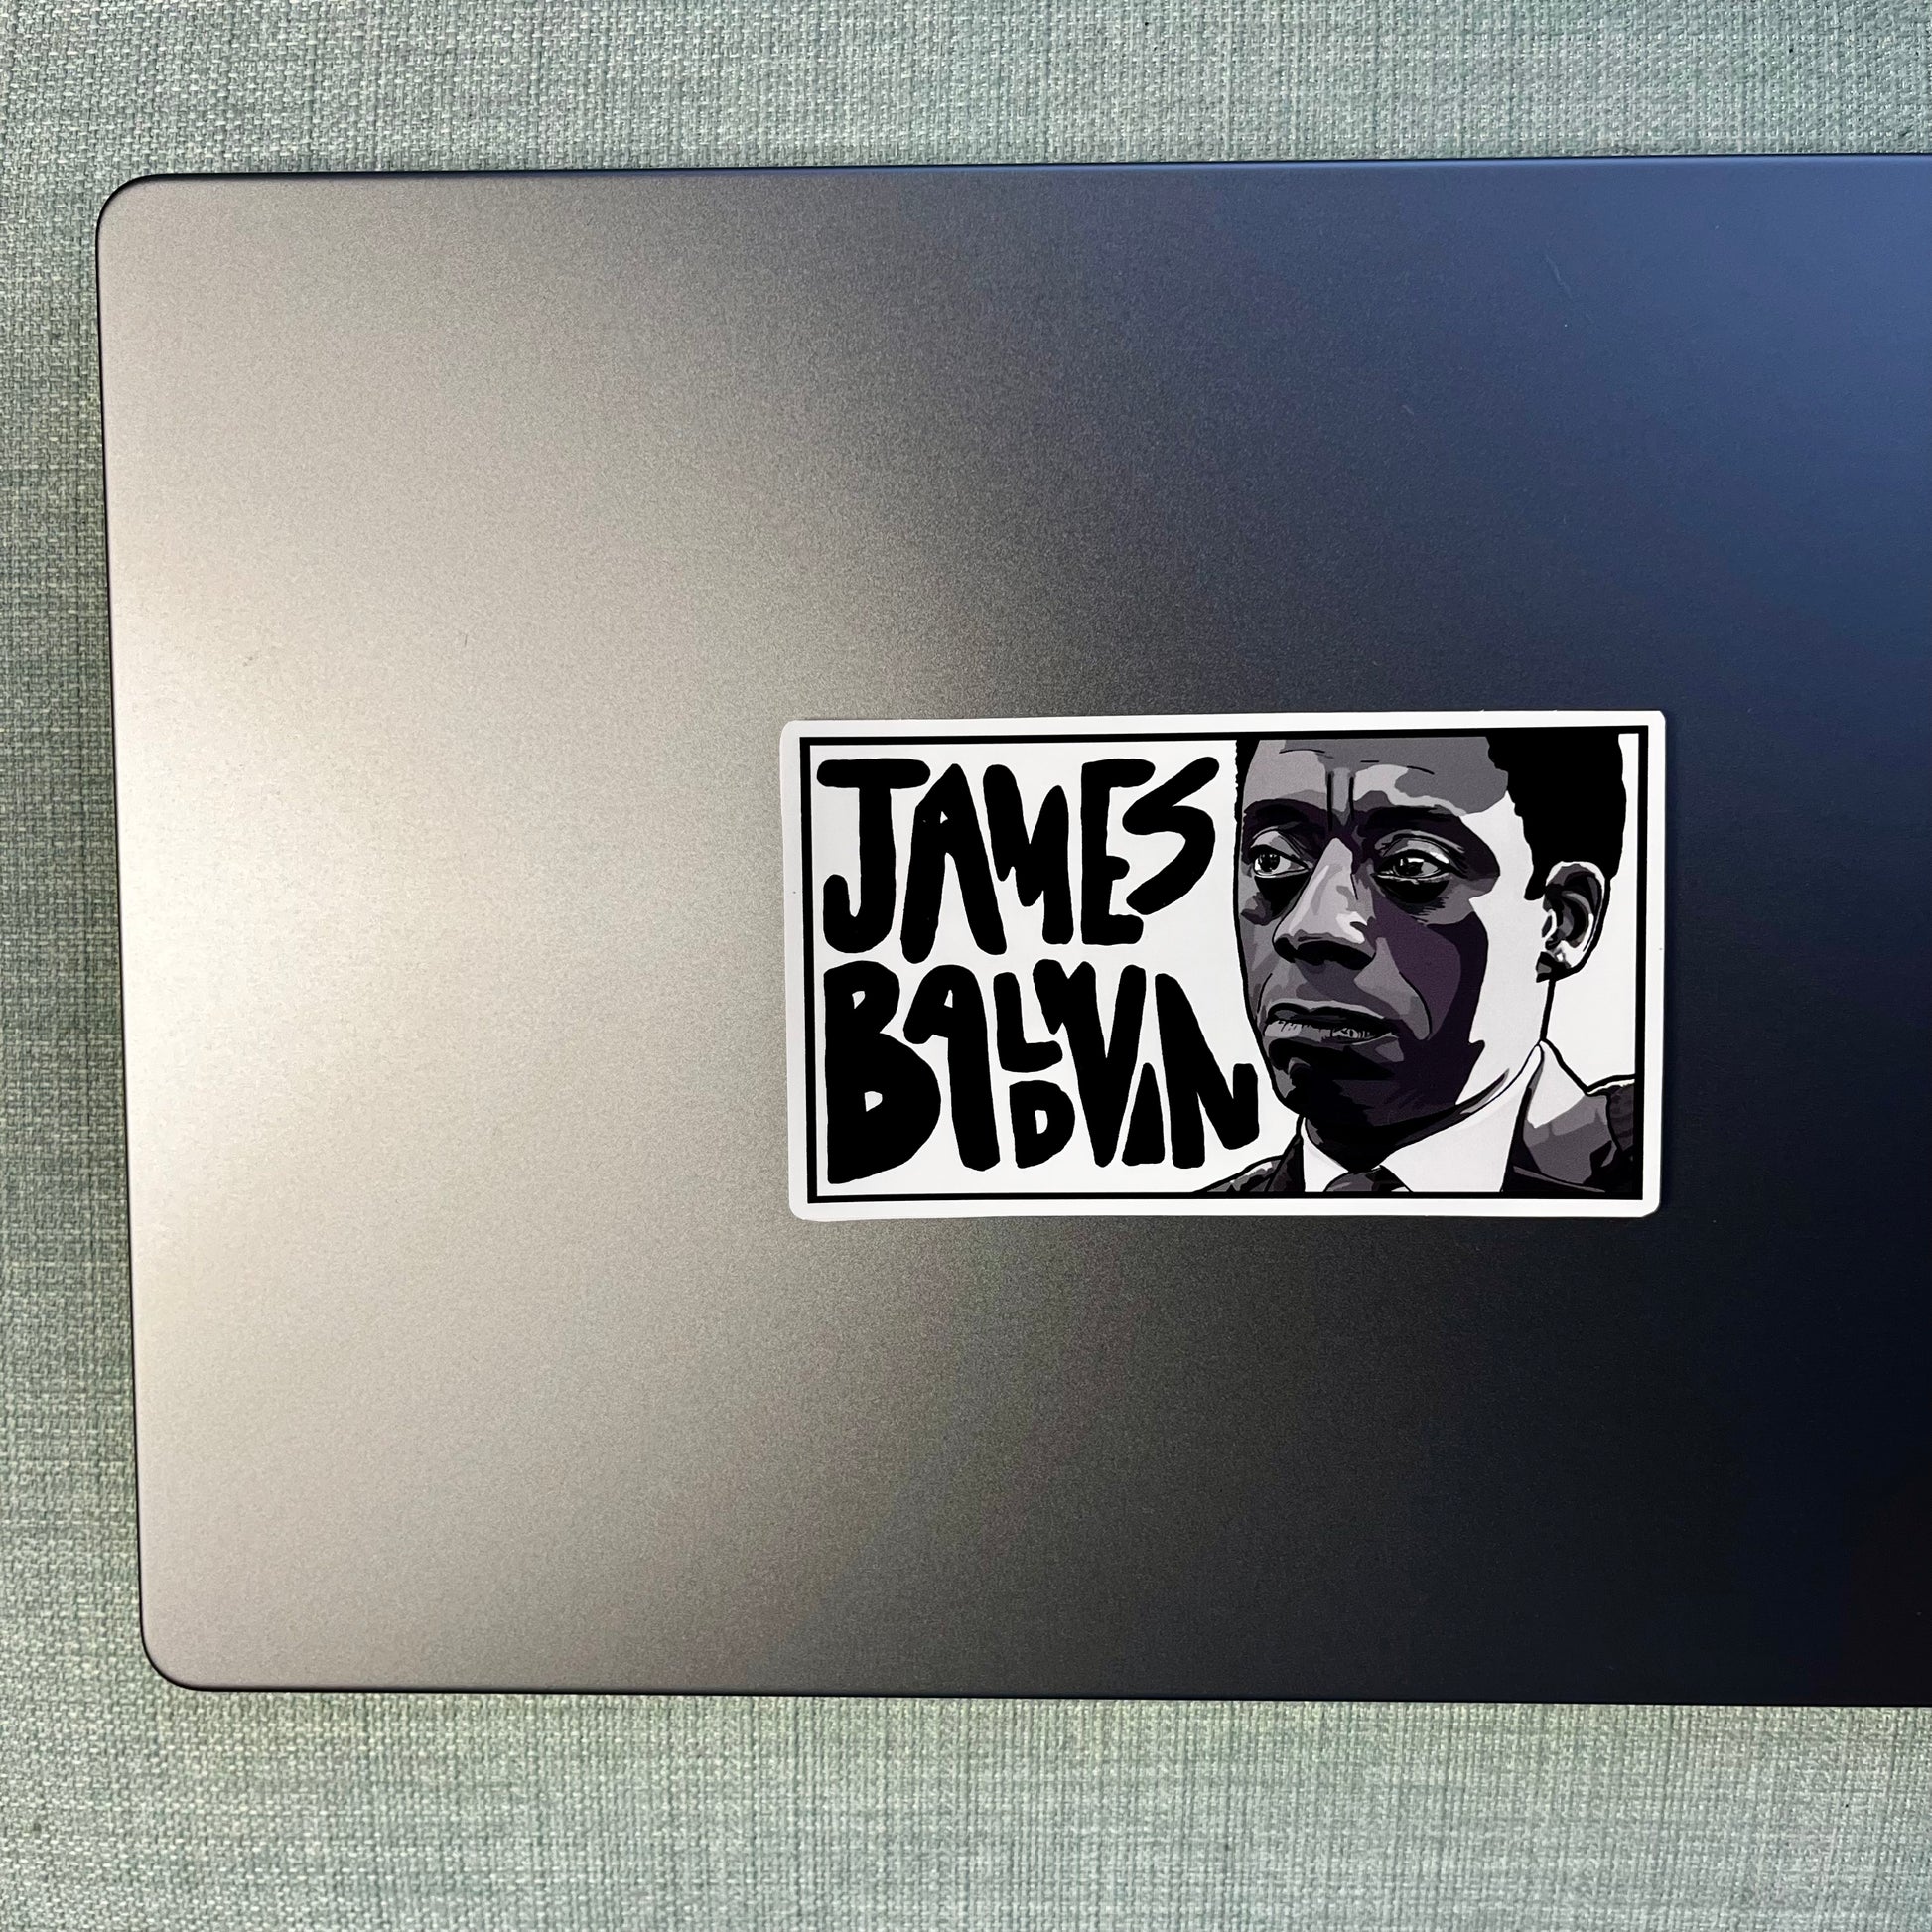 James Baldwin Sticker Queero Gear